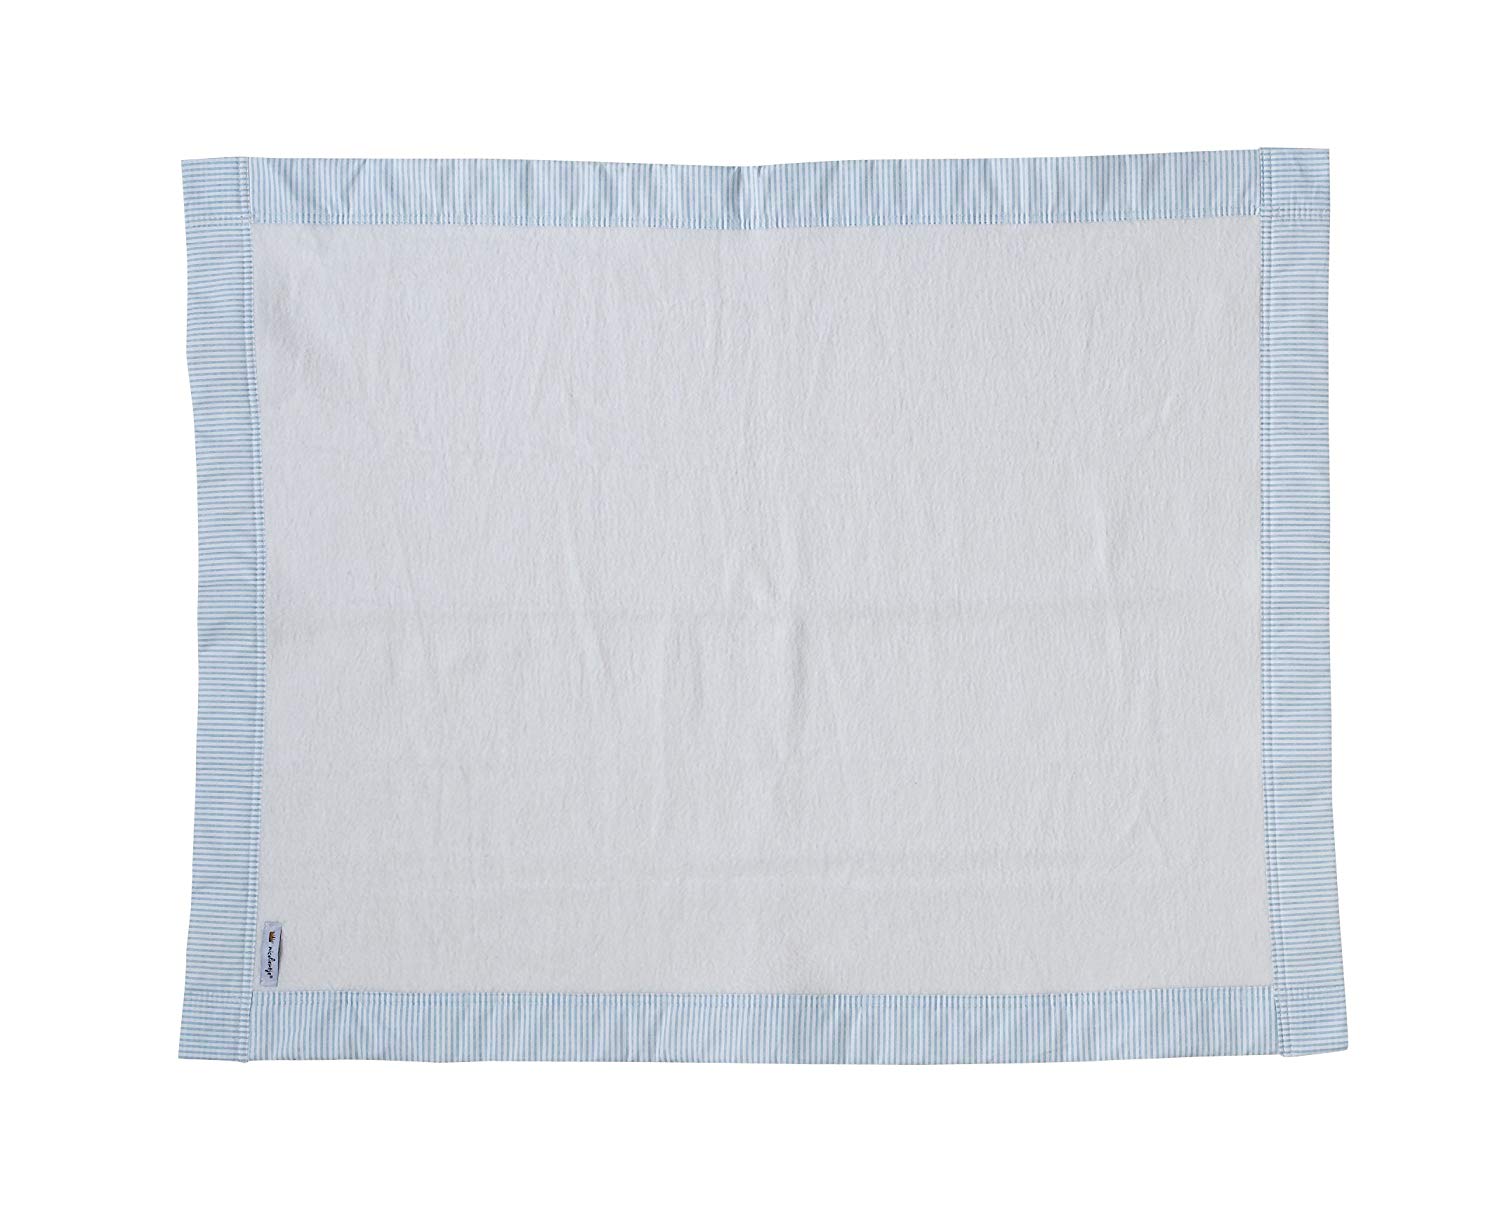 Luxury Cuddle Blanket 100% Cotton 120 x 150 cm with Decorative Border Striped Design, Blue, 120x150 cm